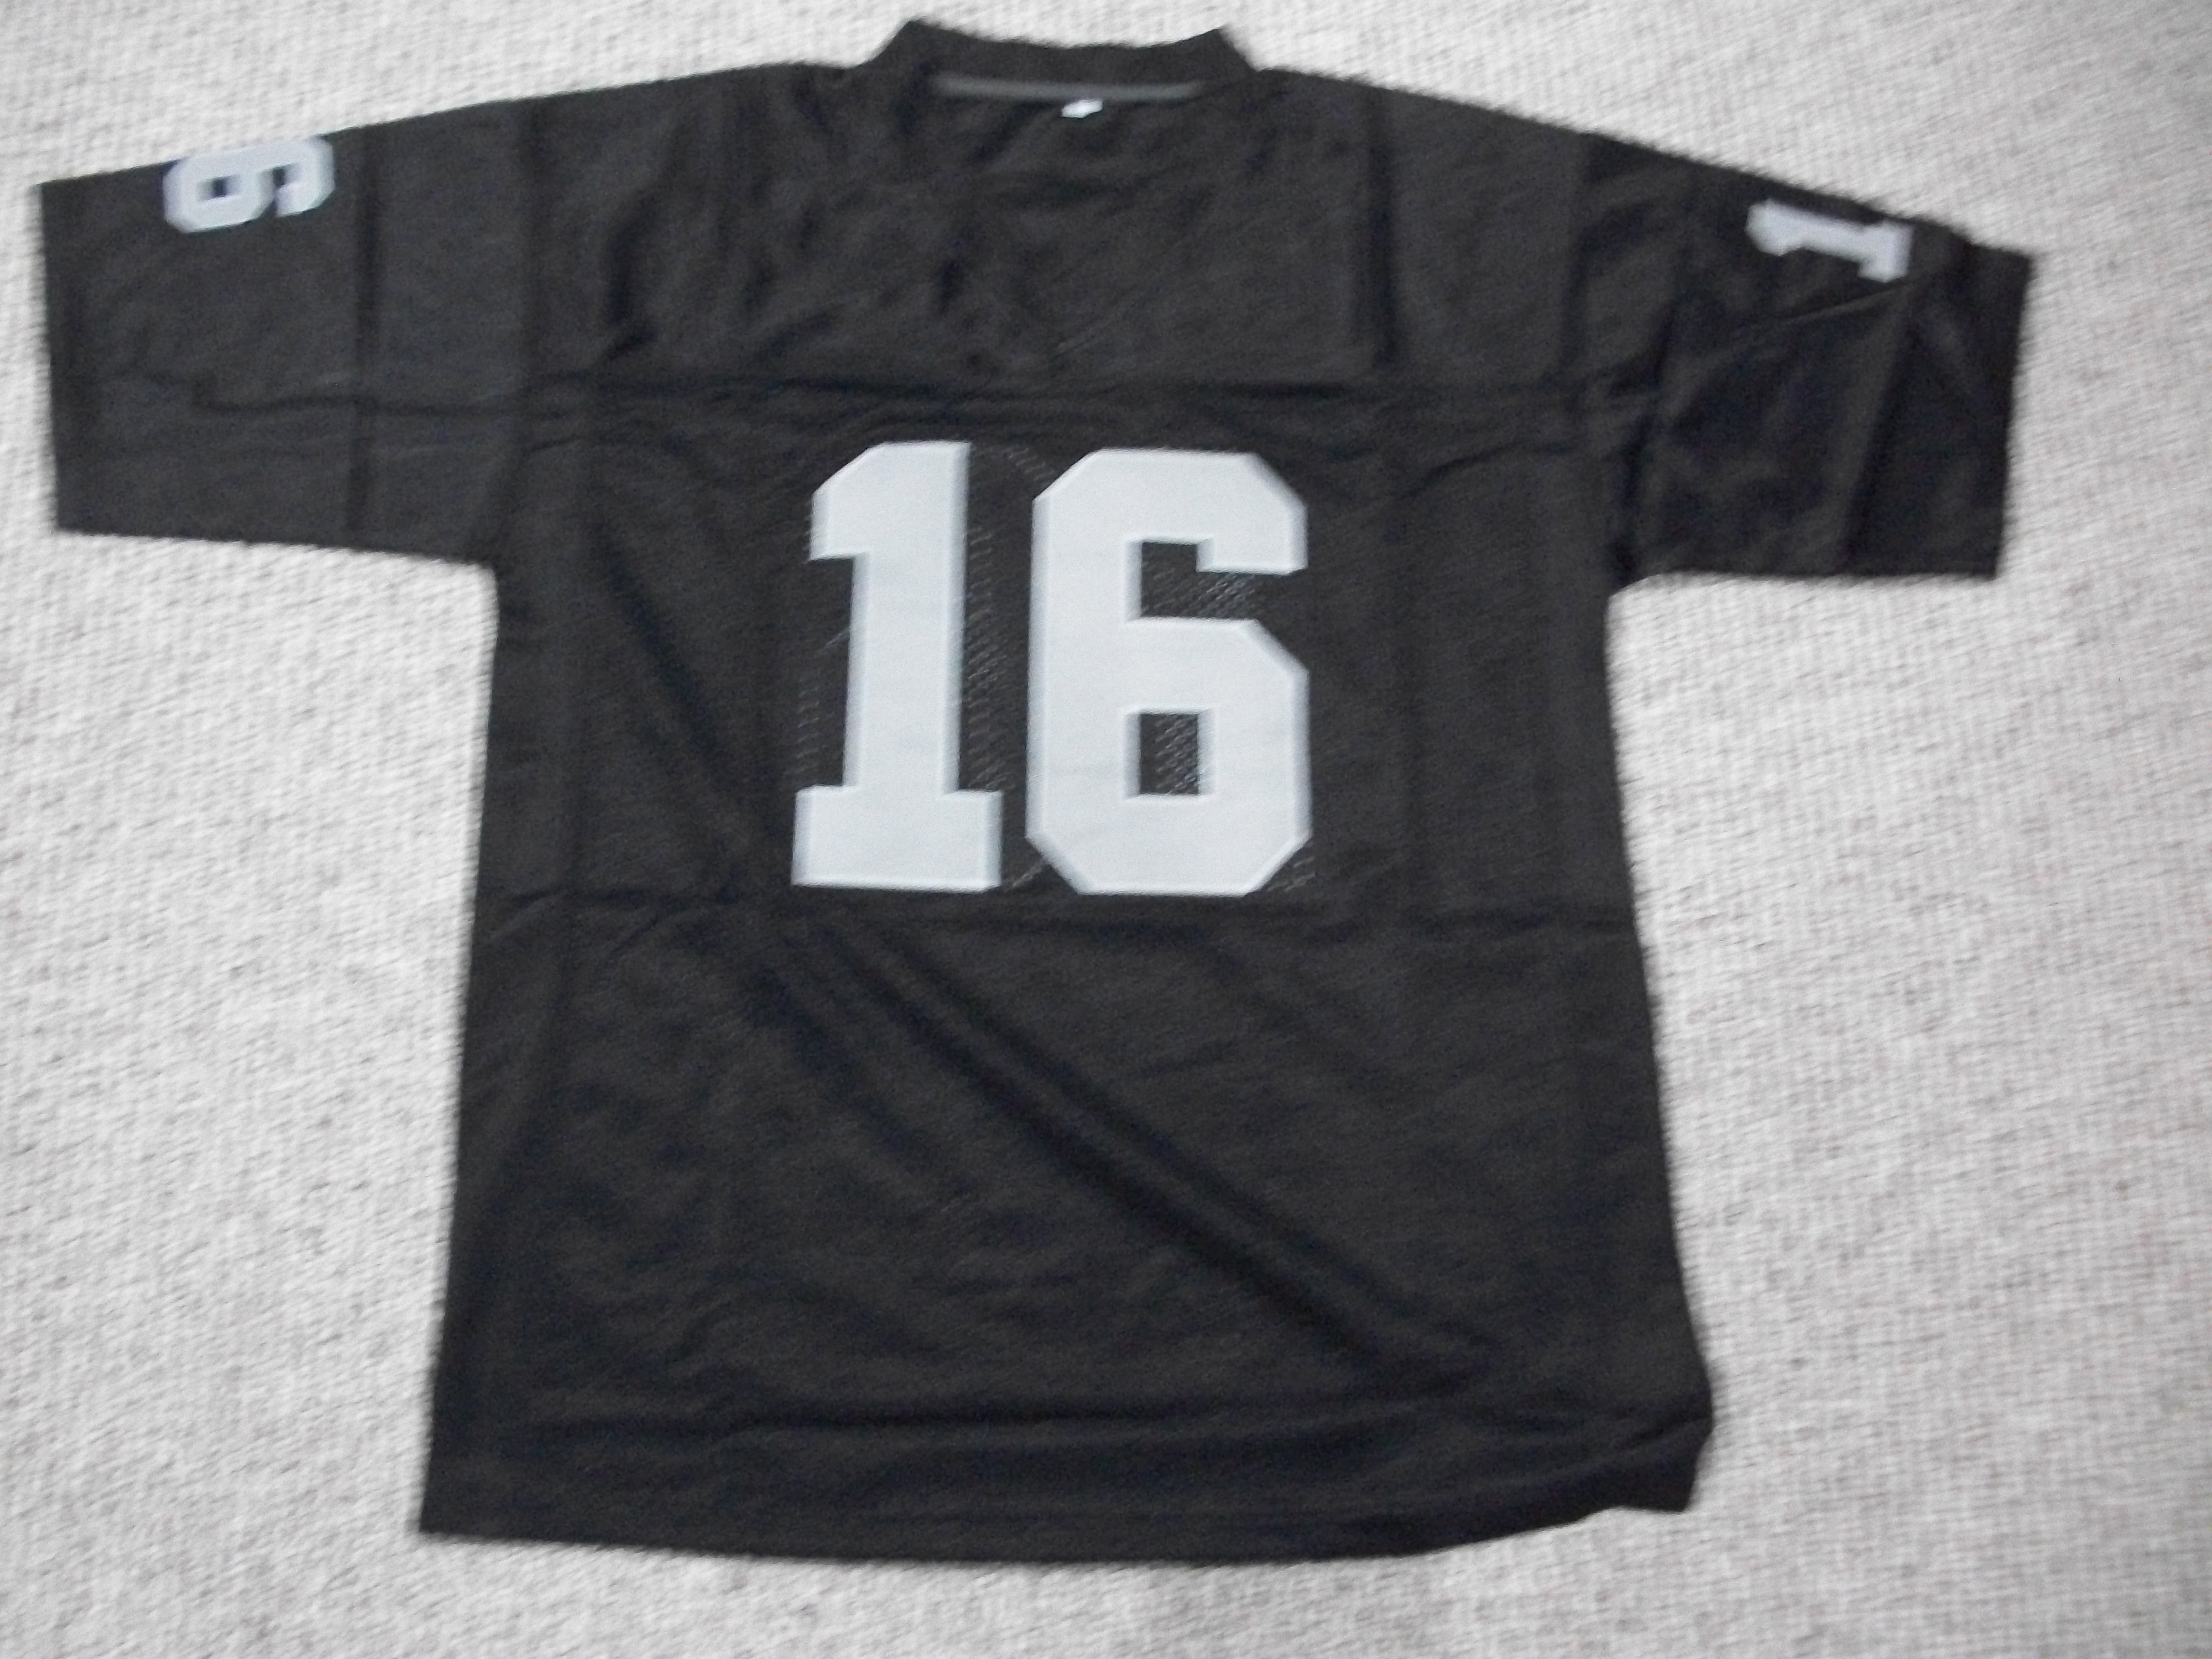 Jim Plunkett Jersey #16 Oakland/LA Unsigned Custom Stitched Black Football New No Brands/Logos Sizes S-3XL